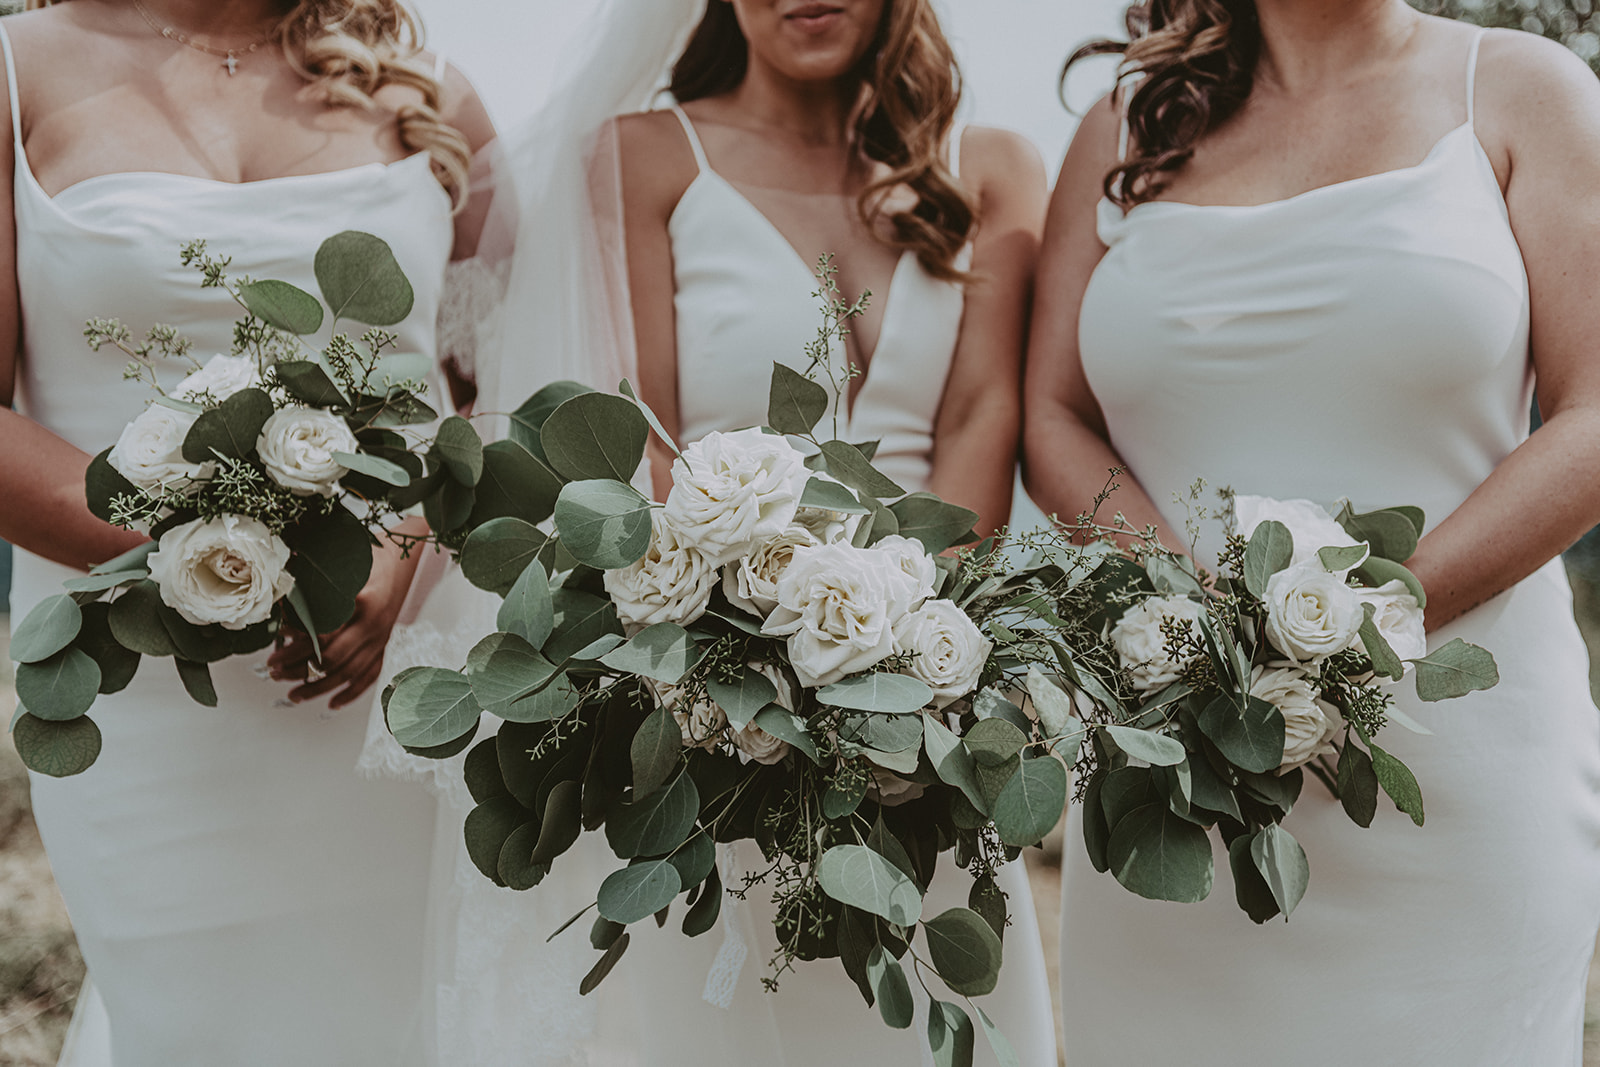 bridal bouquet & bridesmaids bouquets, wedding florals by Rook and Rose florist